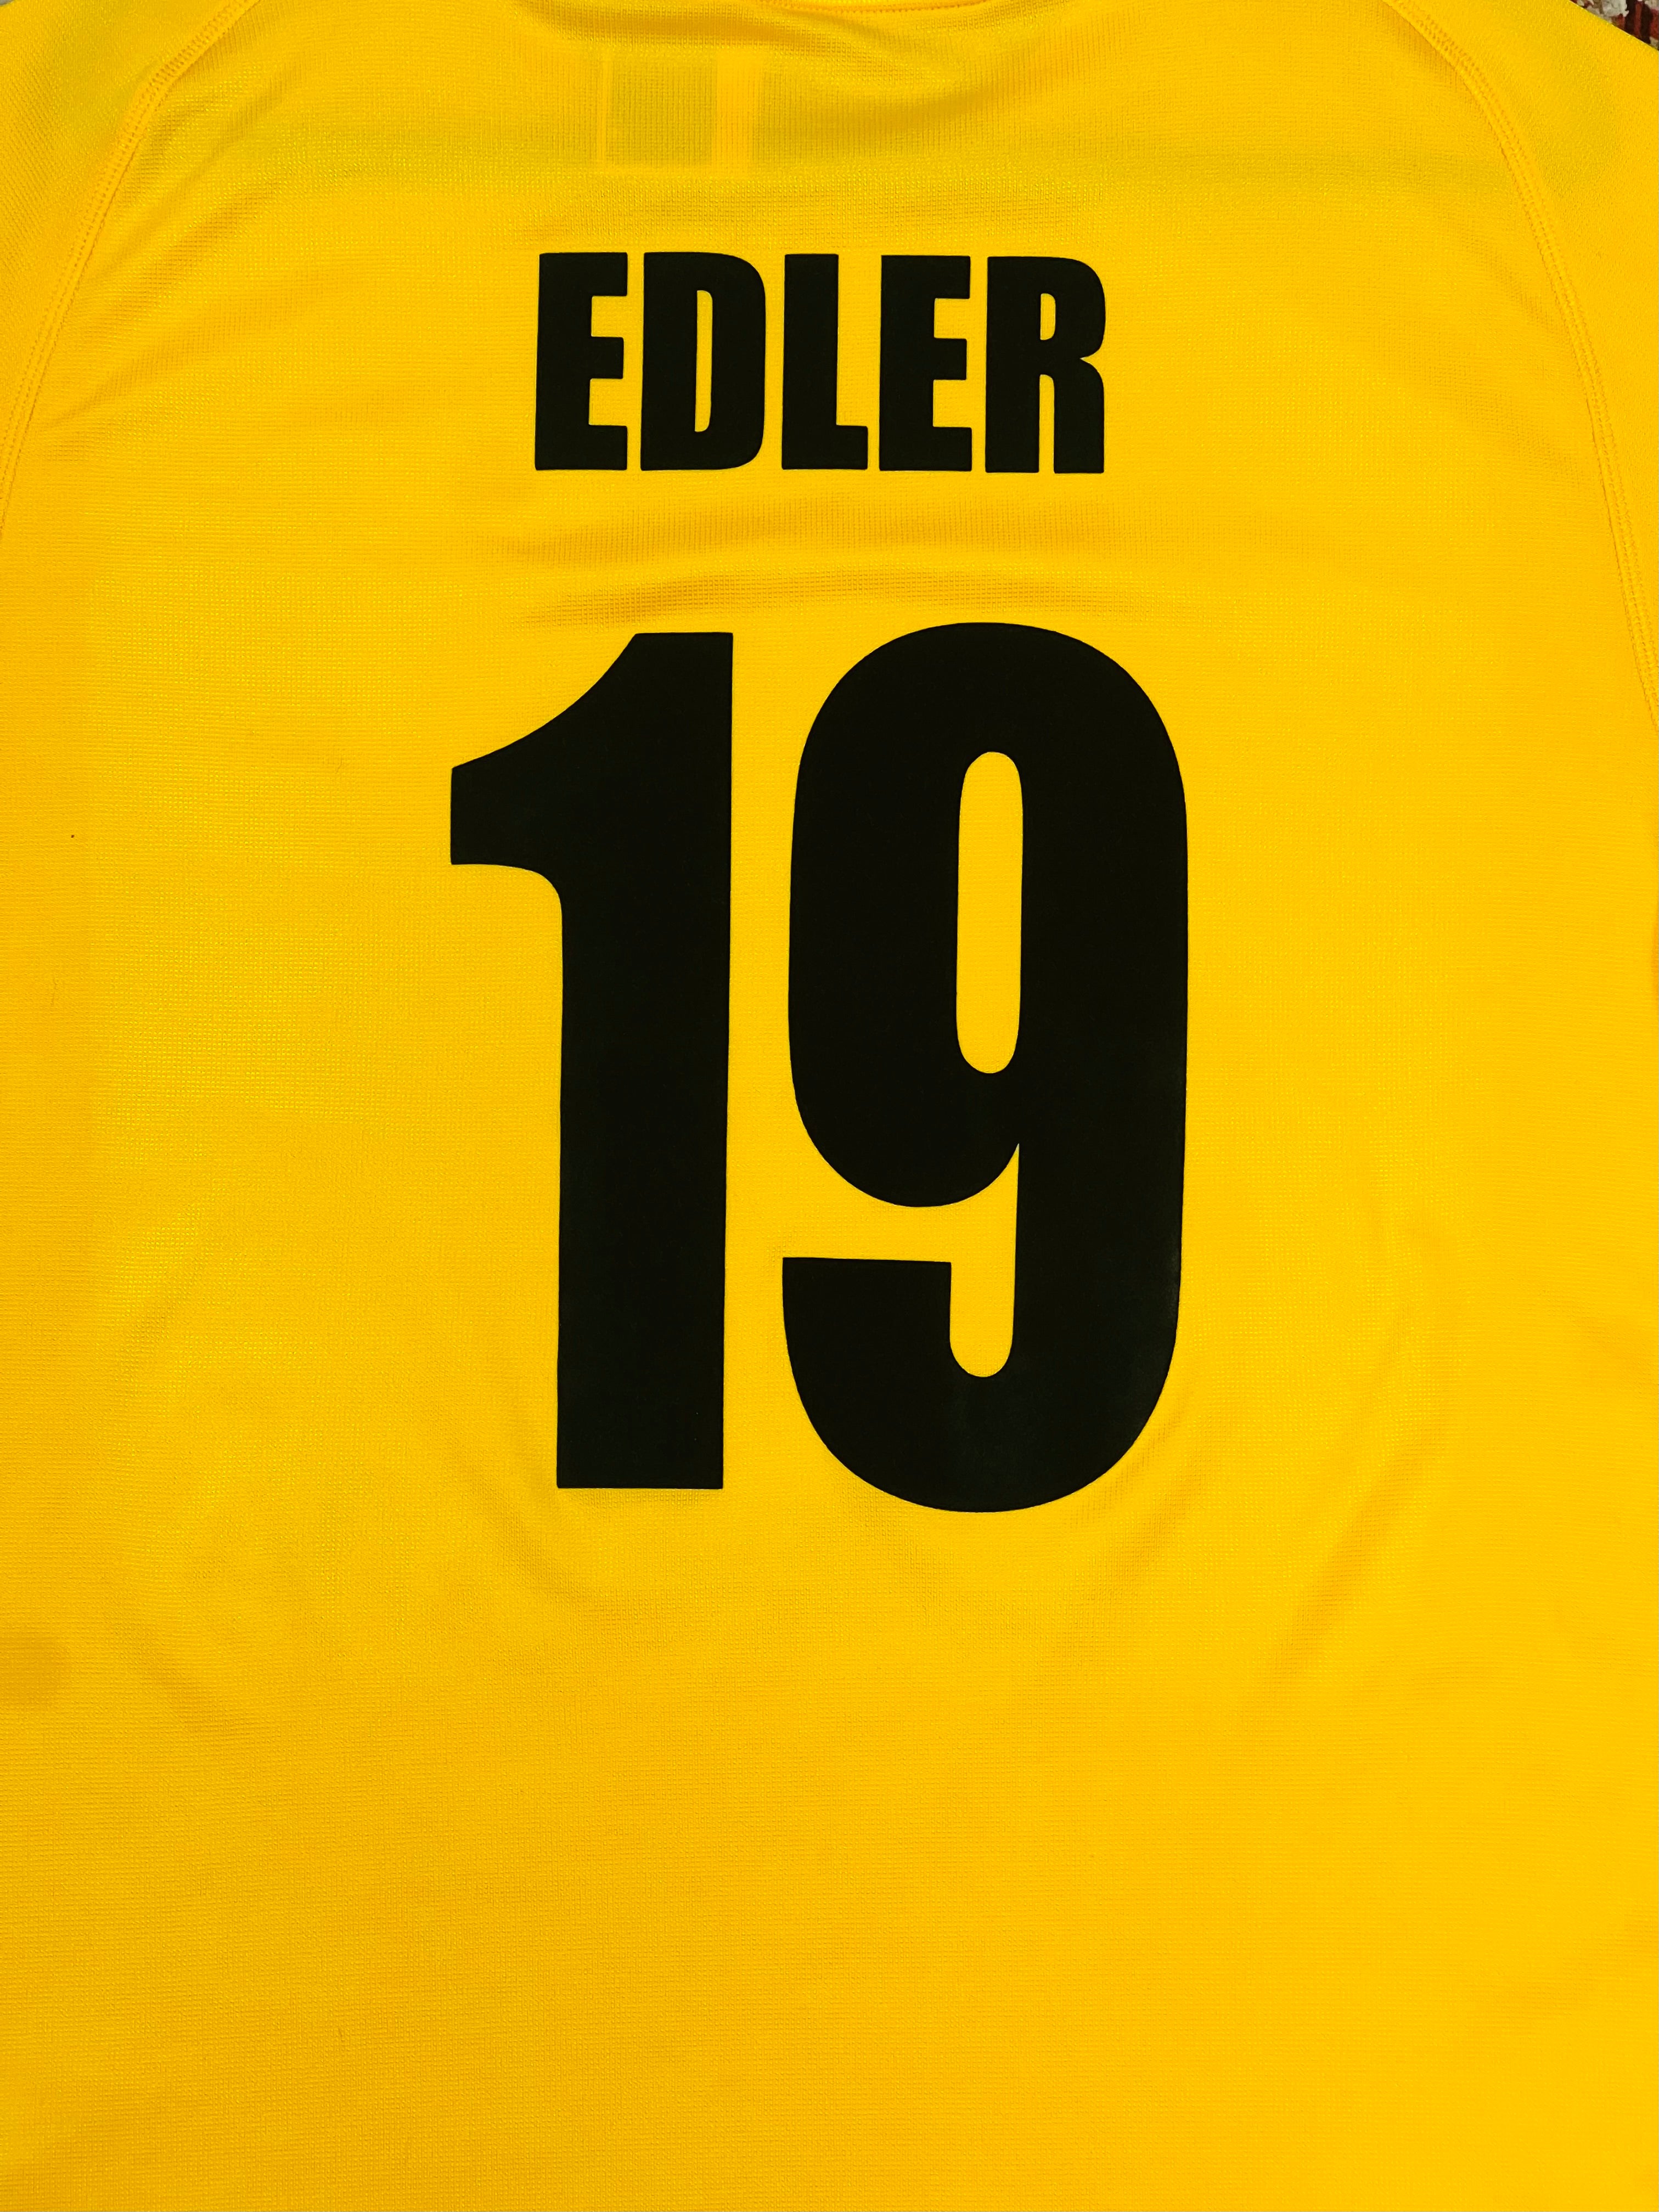 Lombard Edler FC 1996 Soccer Jersey #19 L